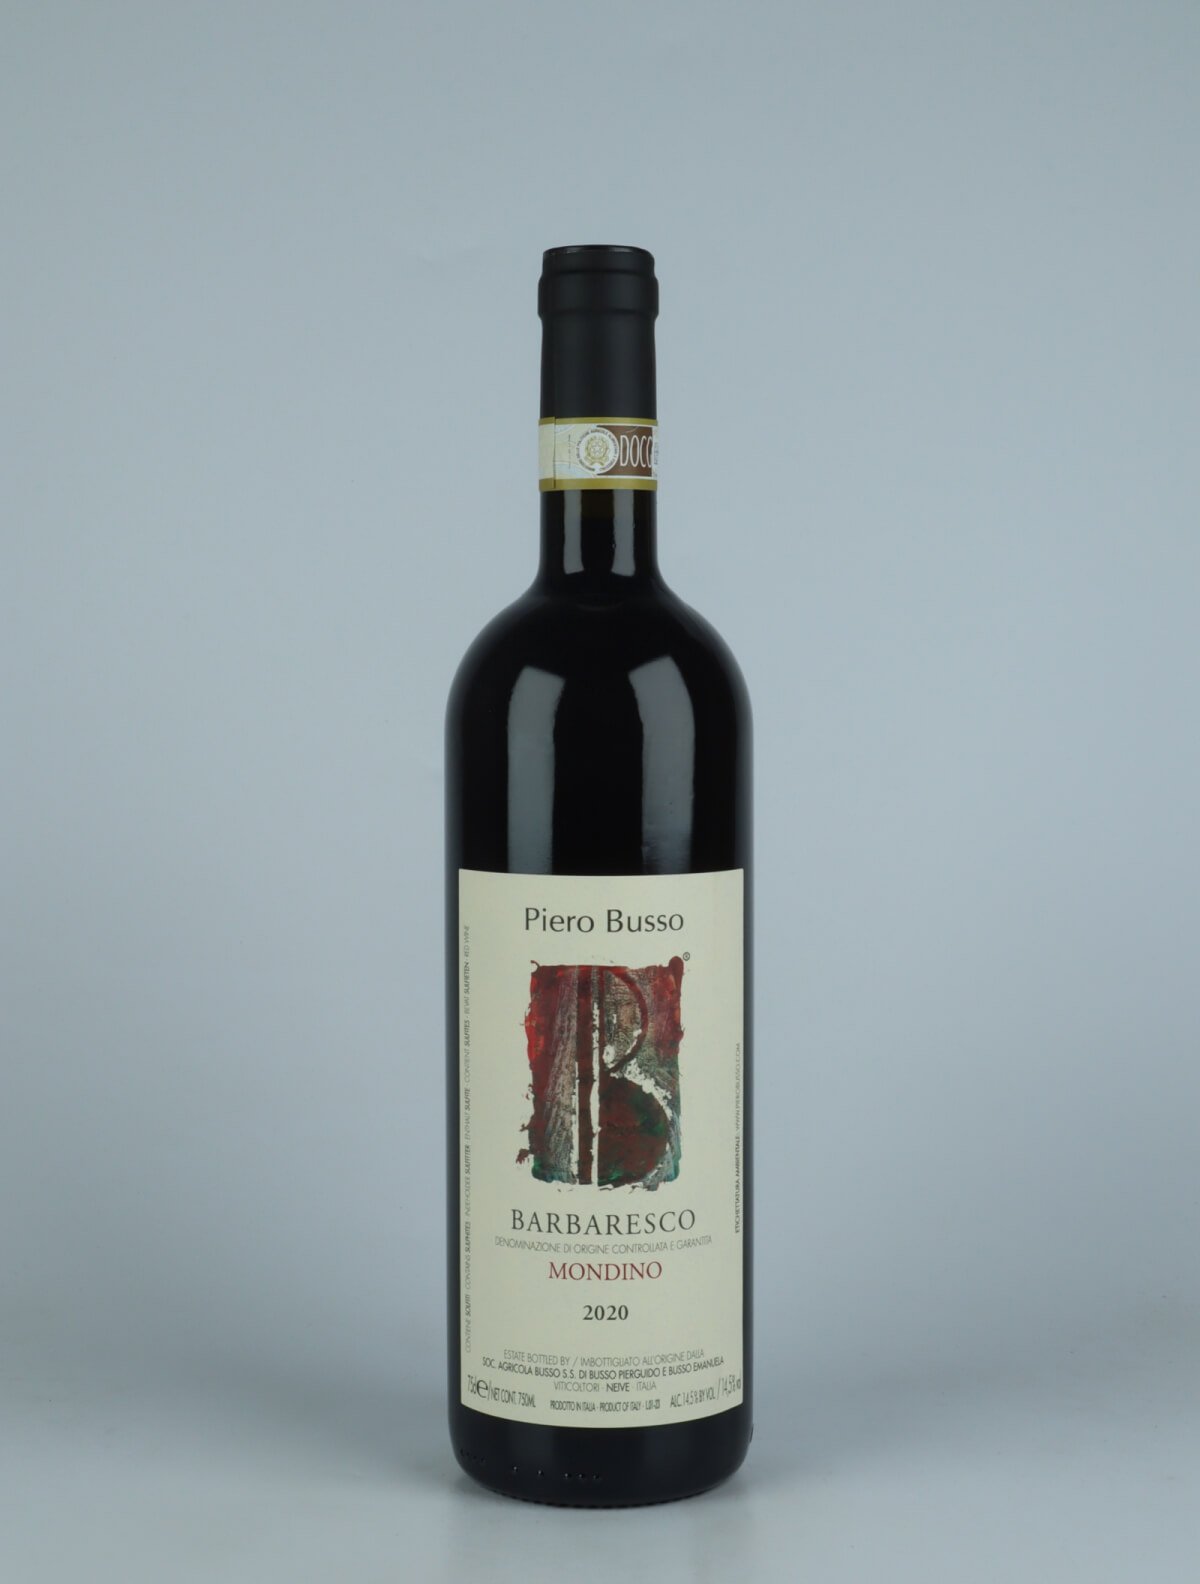 A bottle 2020 Barbaresco Mondino Red wine from Piero Busso, Piedmont in Italy